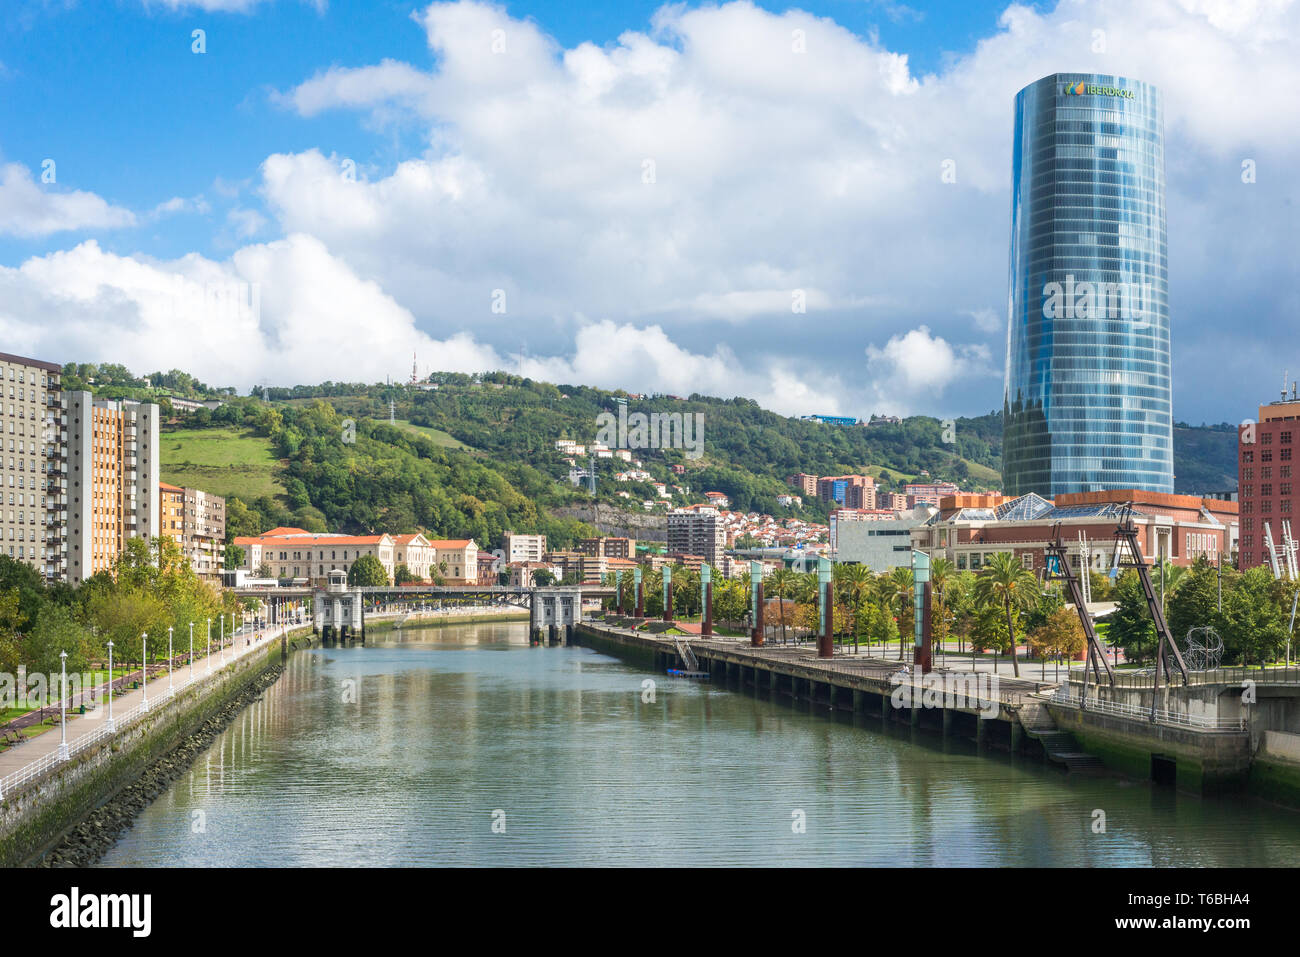 Landmark and modern high-rise building Iberdrola Tower in Bilbao Stock Photo